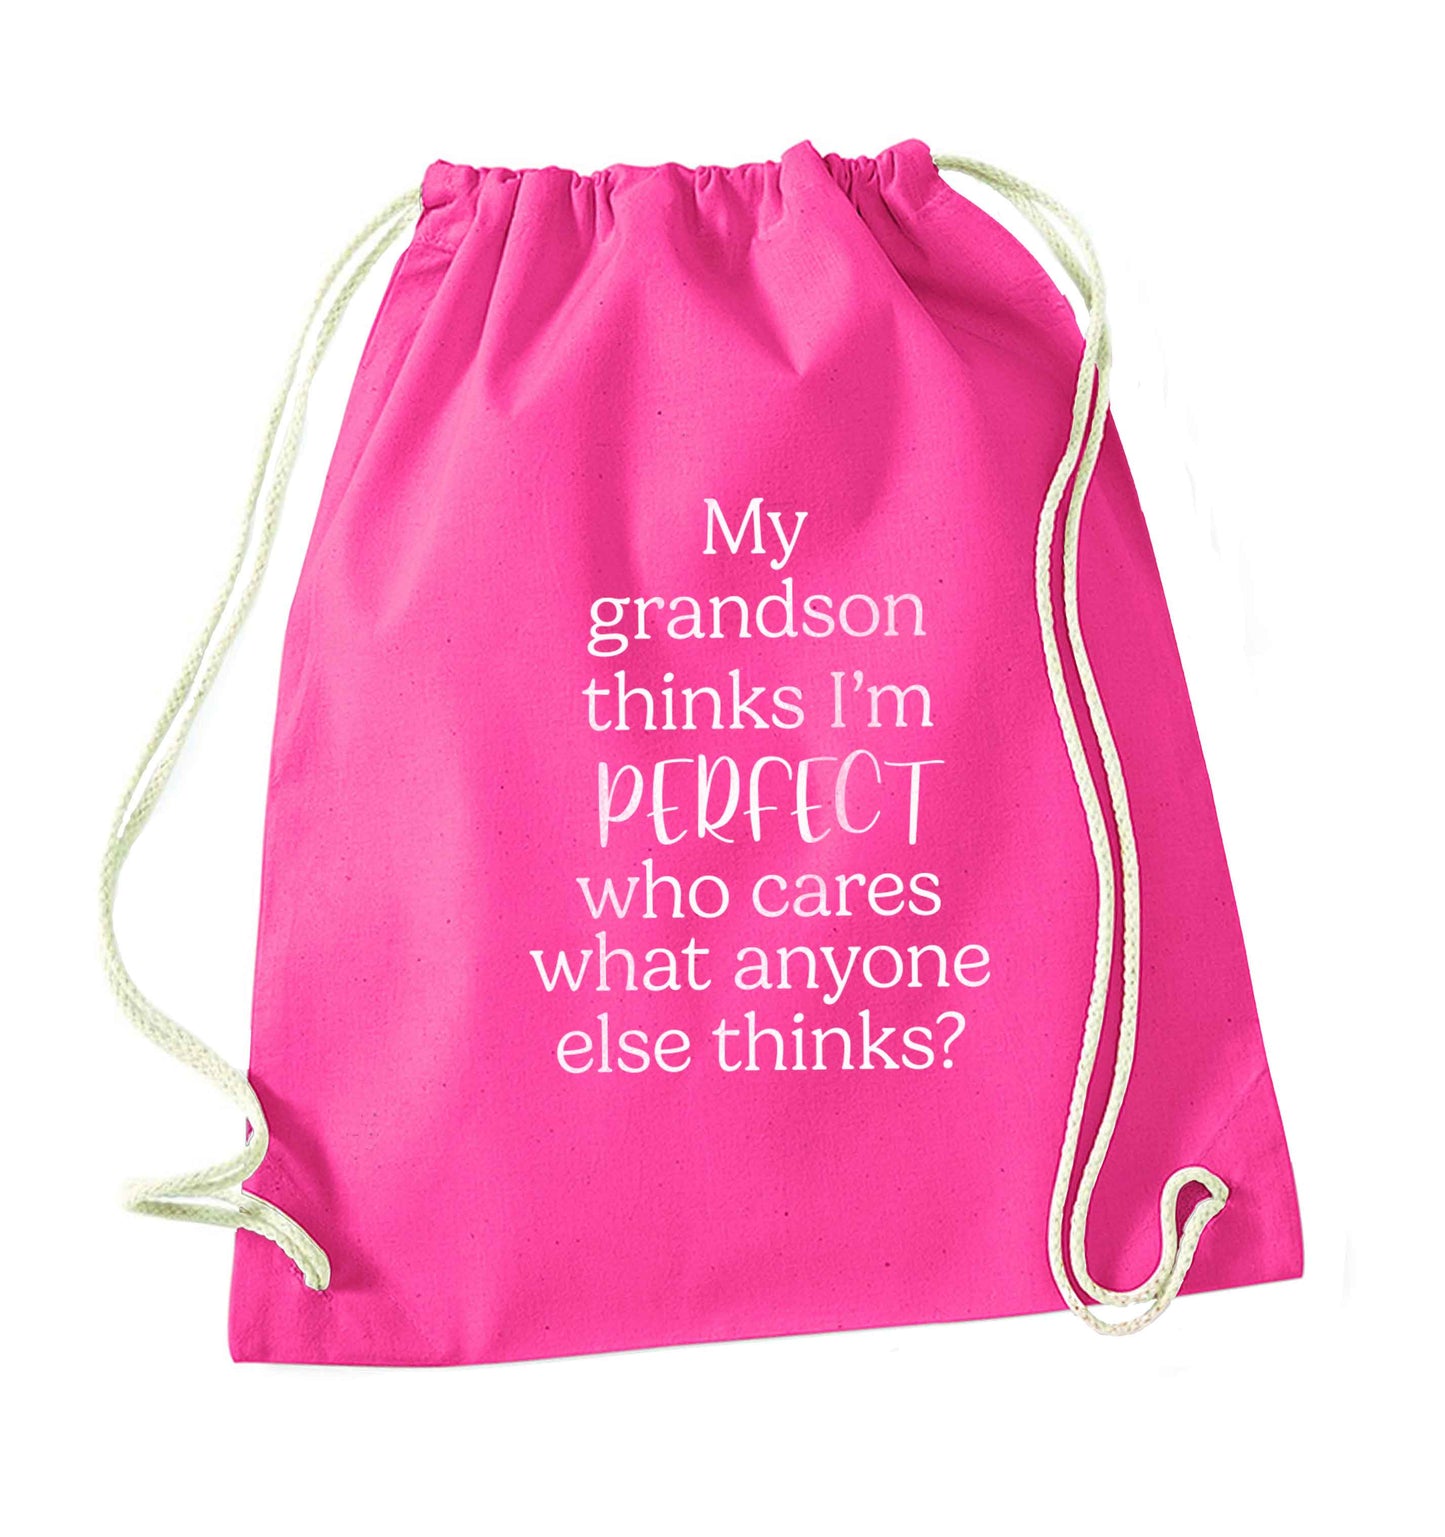 My grandson thinks I'm perfect pink drawstring bag